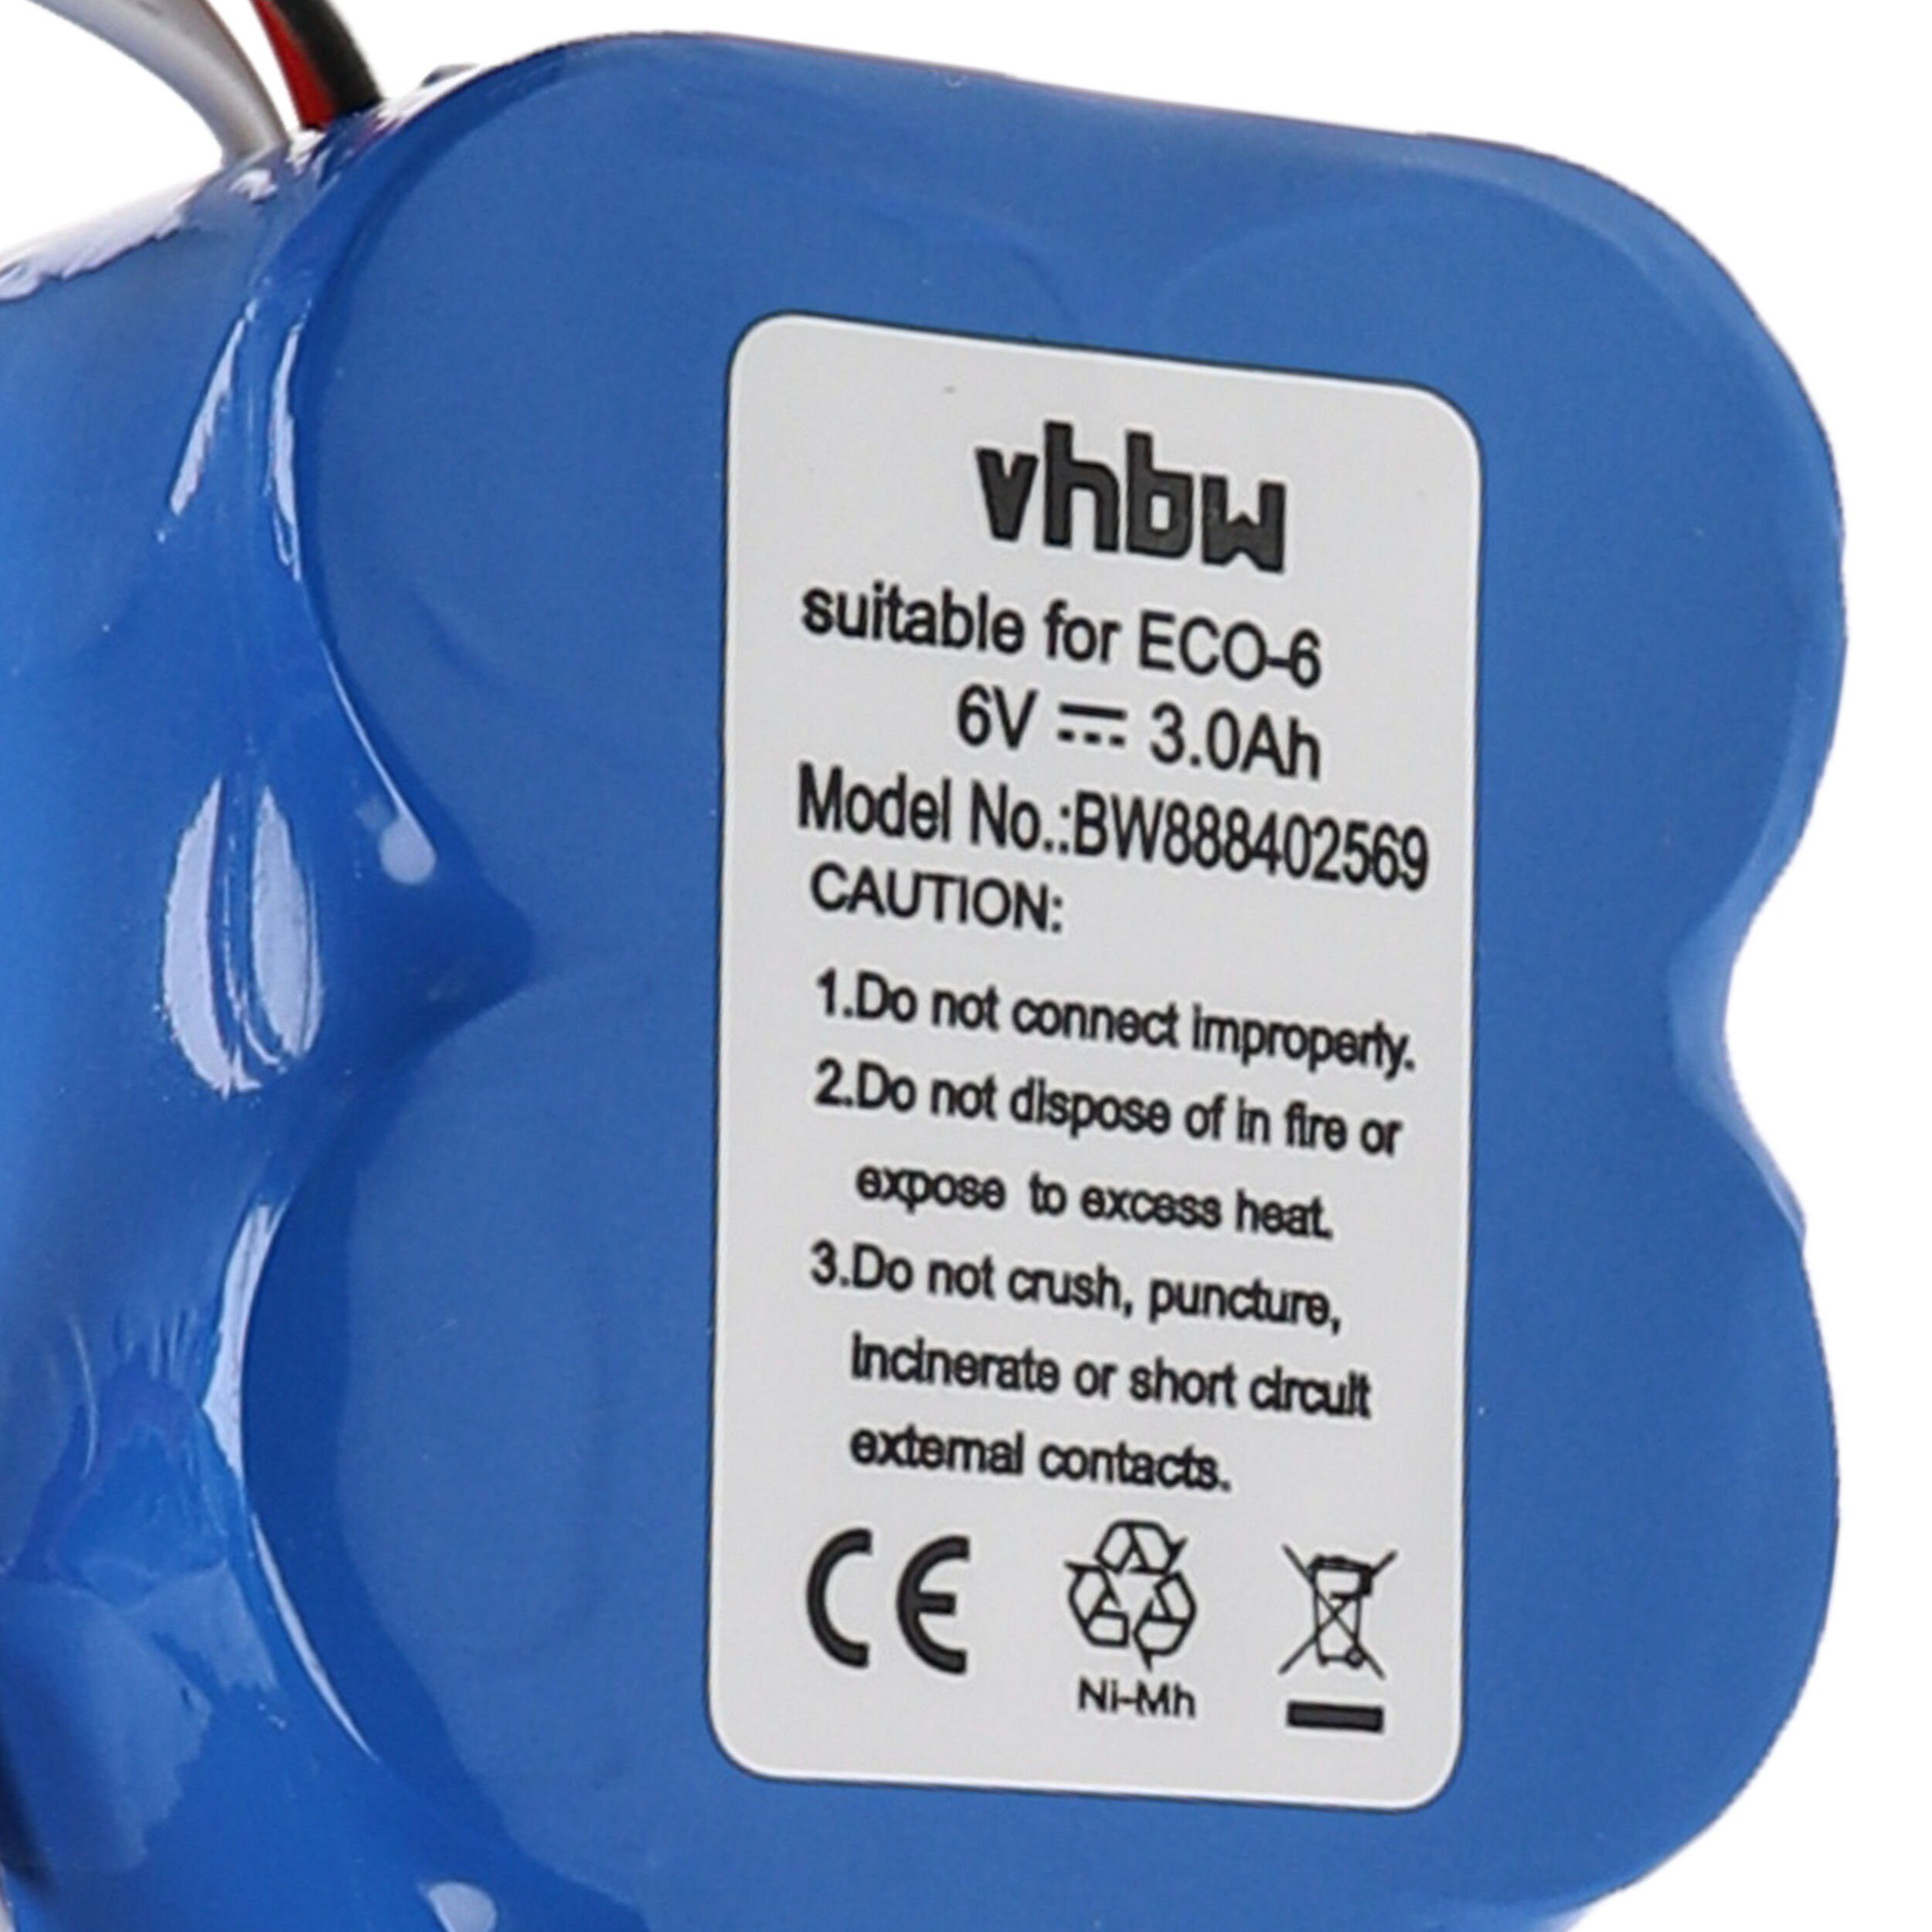 vhbw kompatibel mit RVC0011-001 (6 RVC0010, mAh Hoover 3000 V) NiMH RVC0011, Staubsauger-Akku